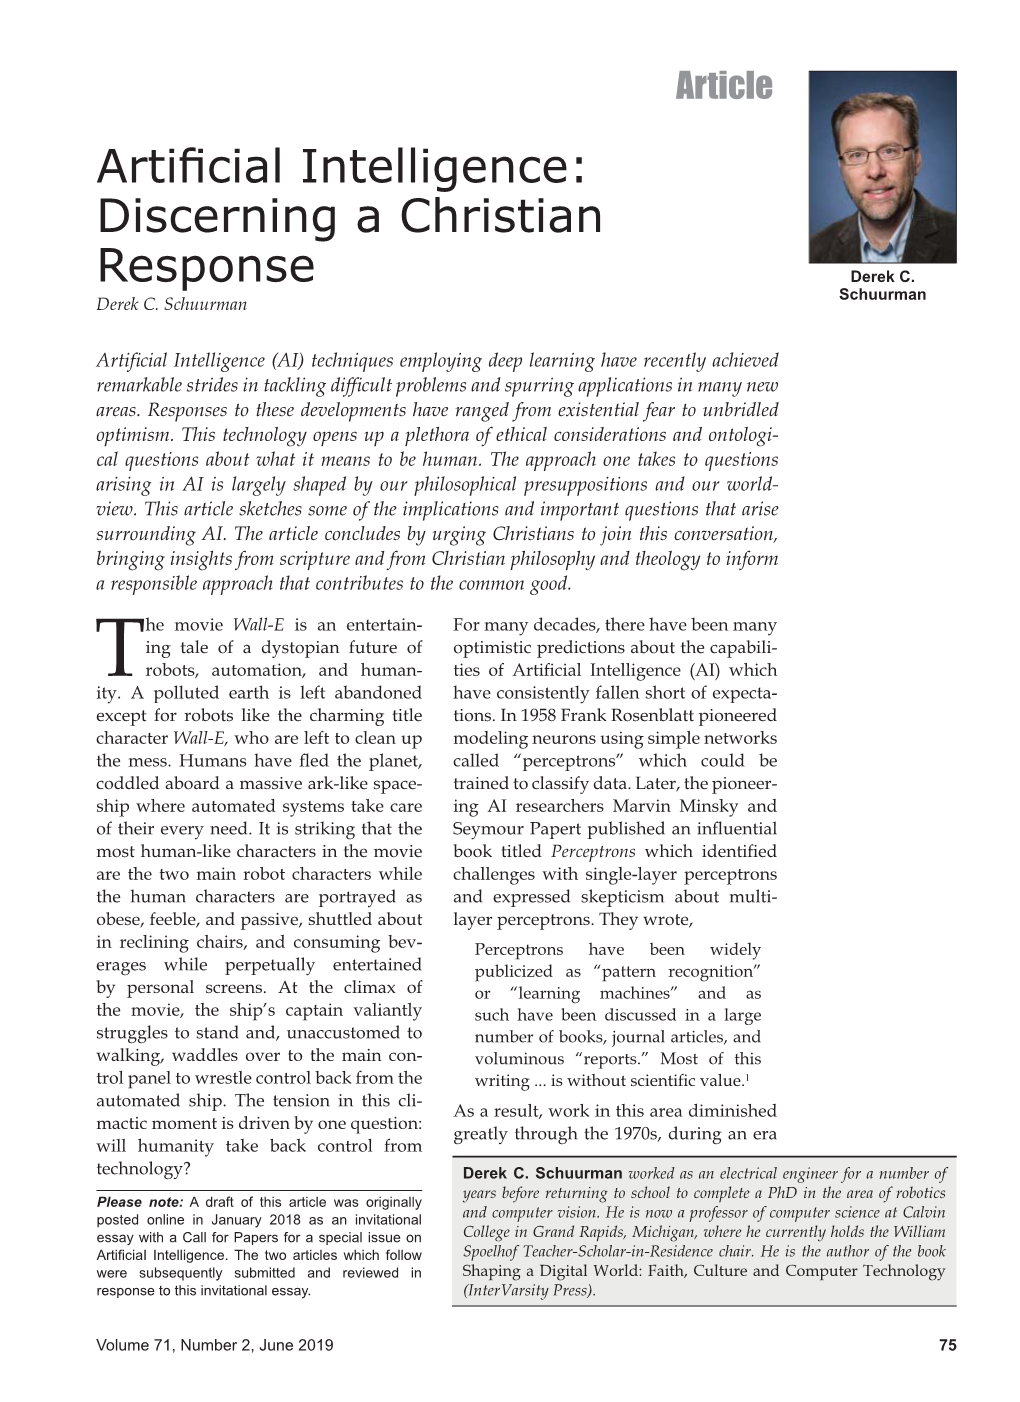 Artificial Intelligence: Discerning a Christian Response